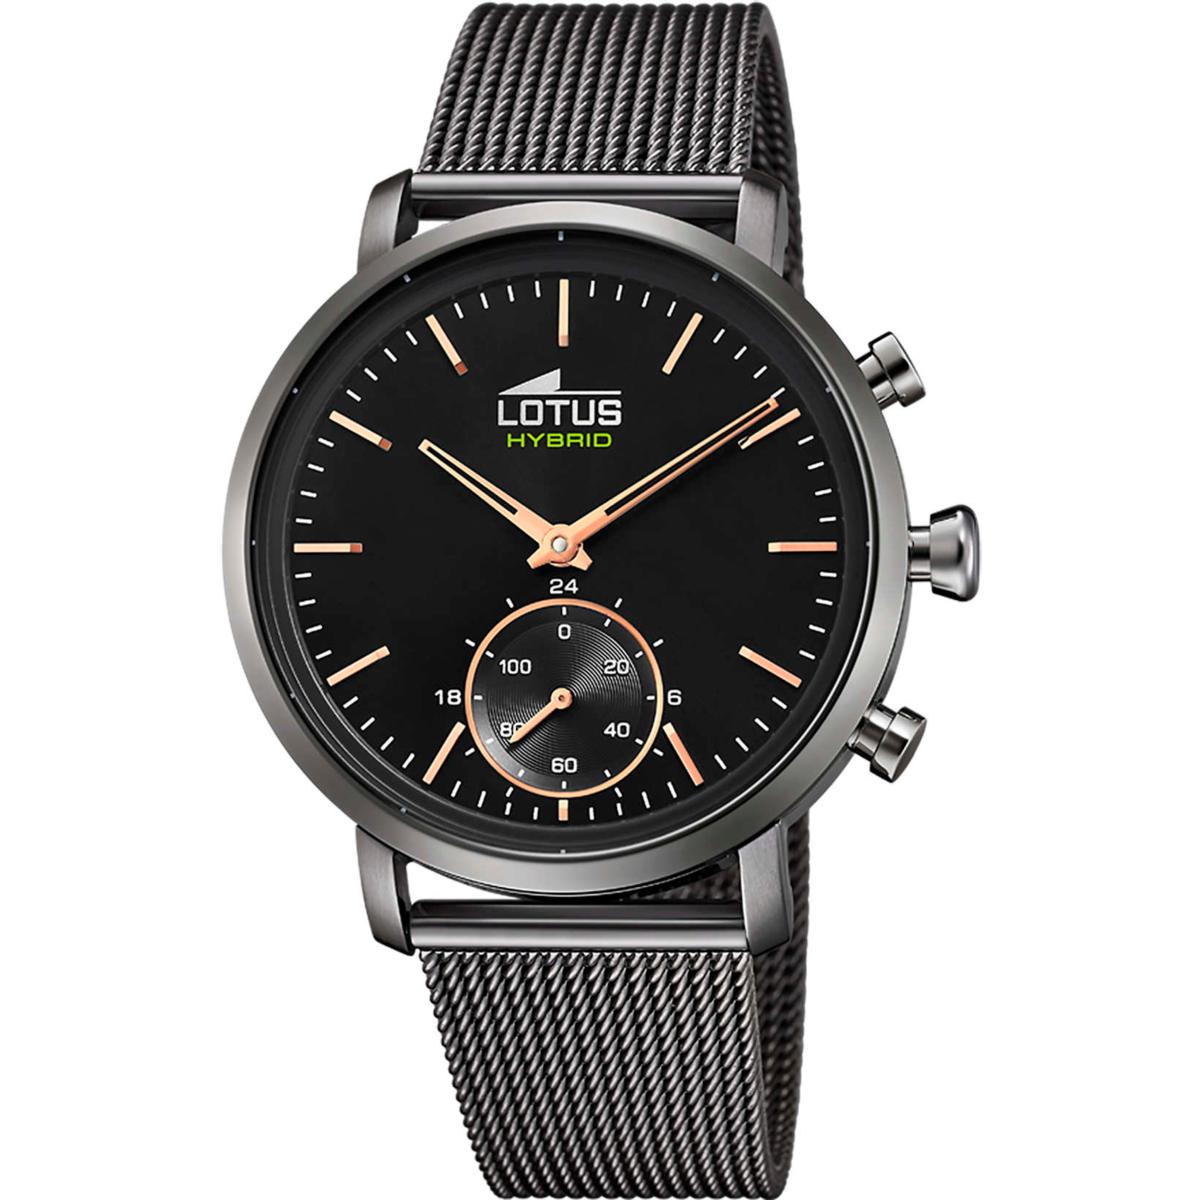 LOTUS HYBRID Watch 188061 - TRIAS Smartwatches SHOP 